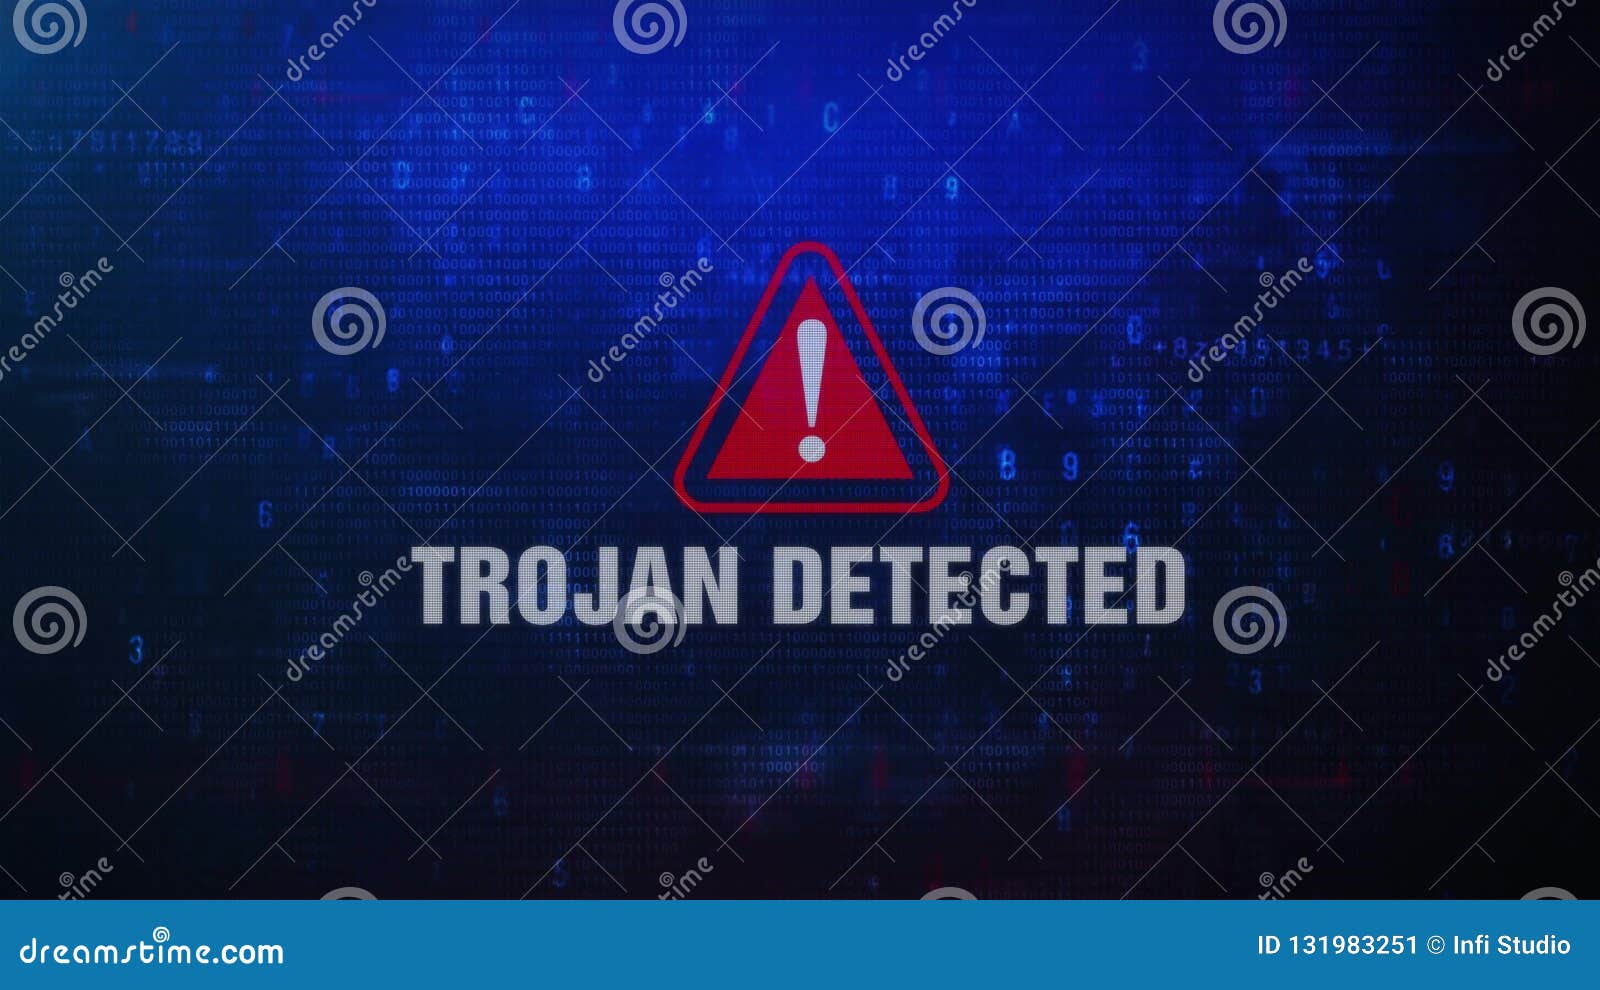 Trojan Detected Alert Warning Error Message Blinking on Screen . Stock